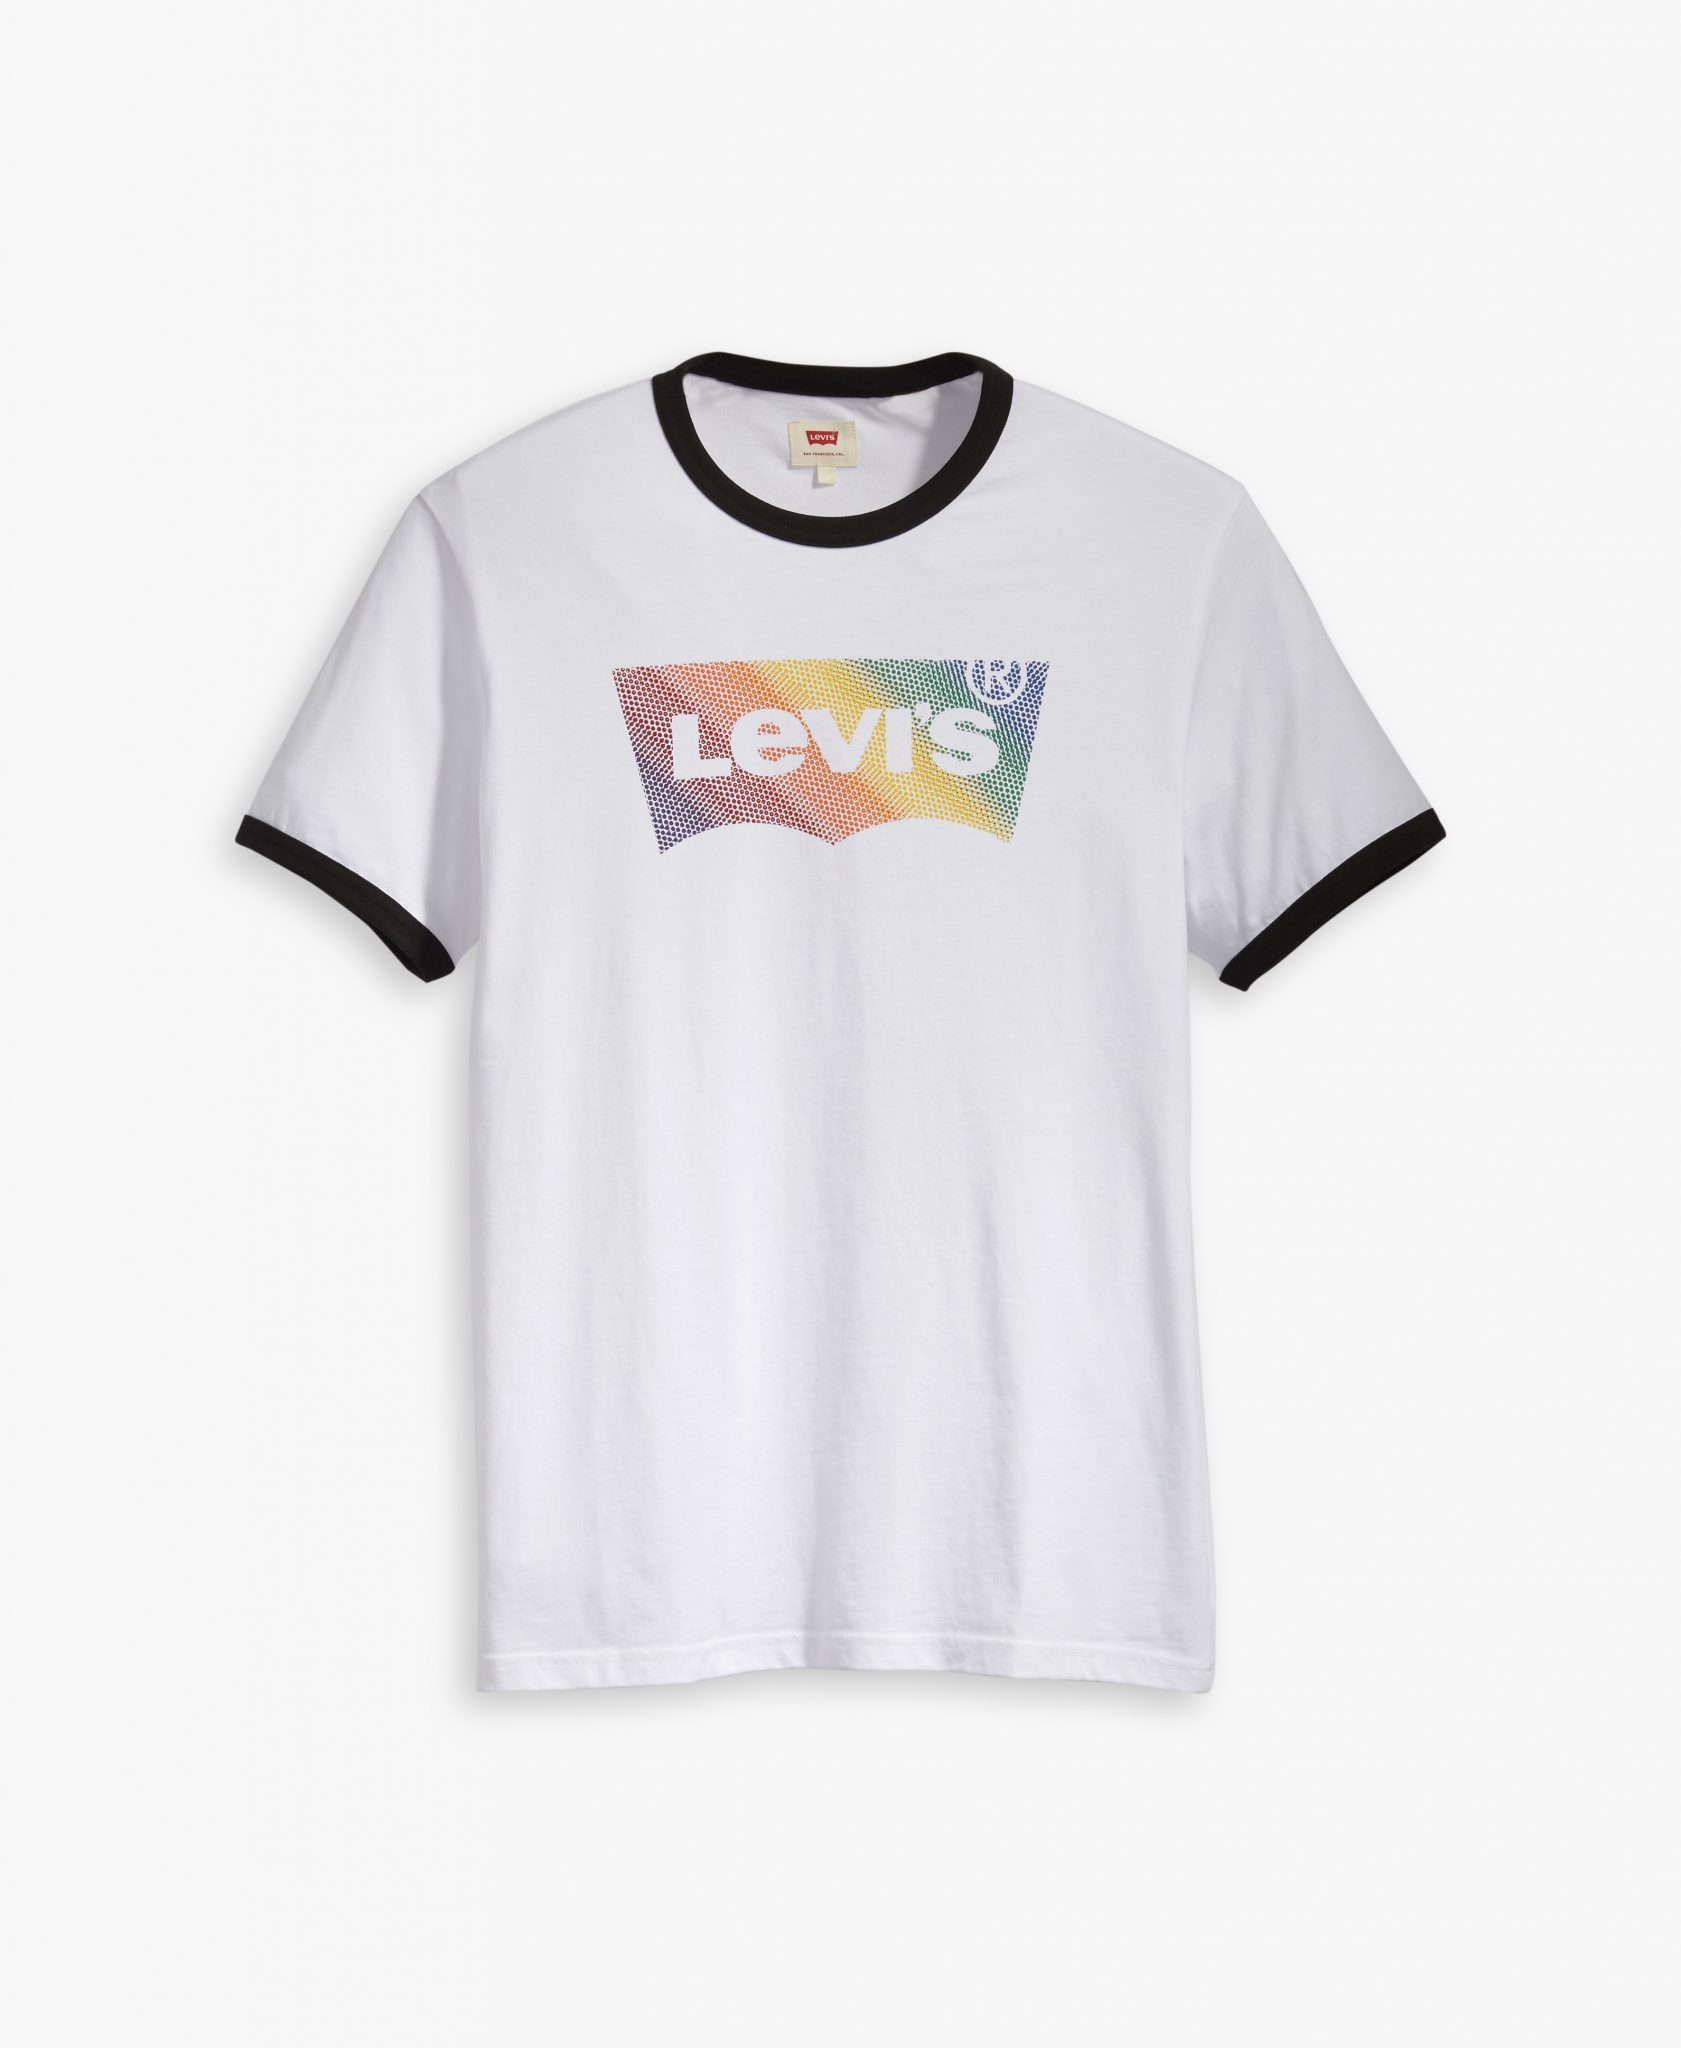 levi's pride t shirt uk